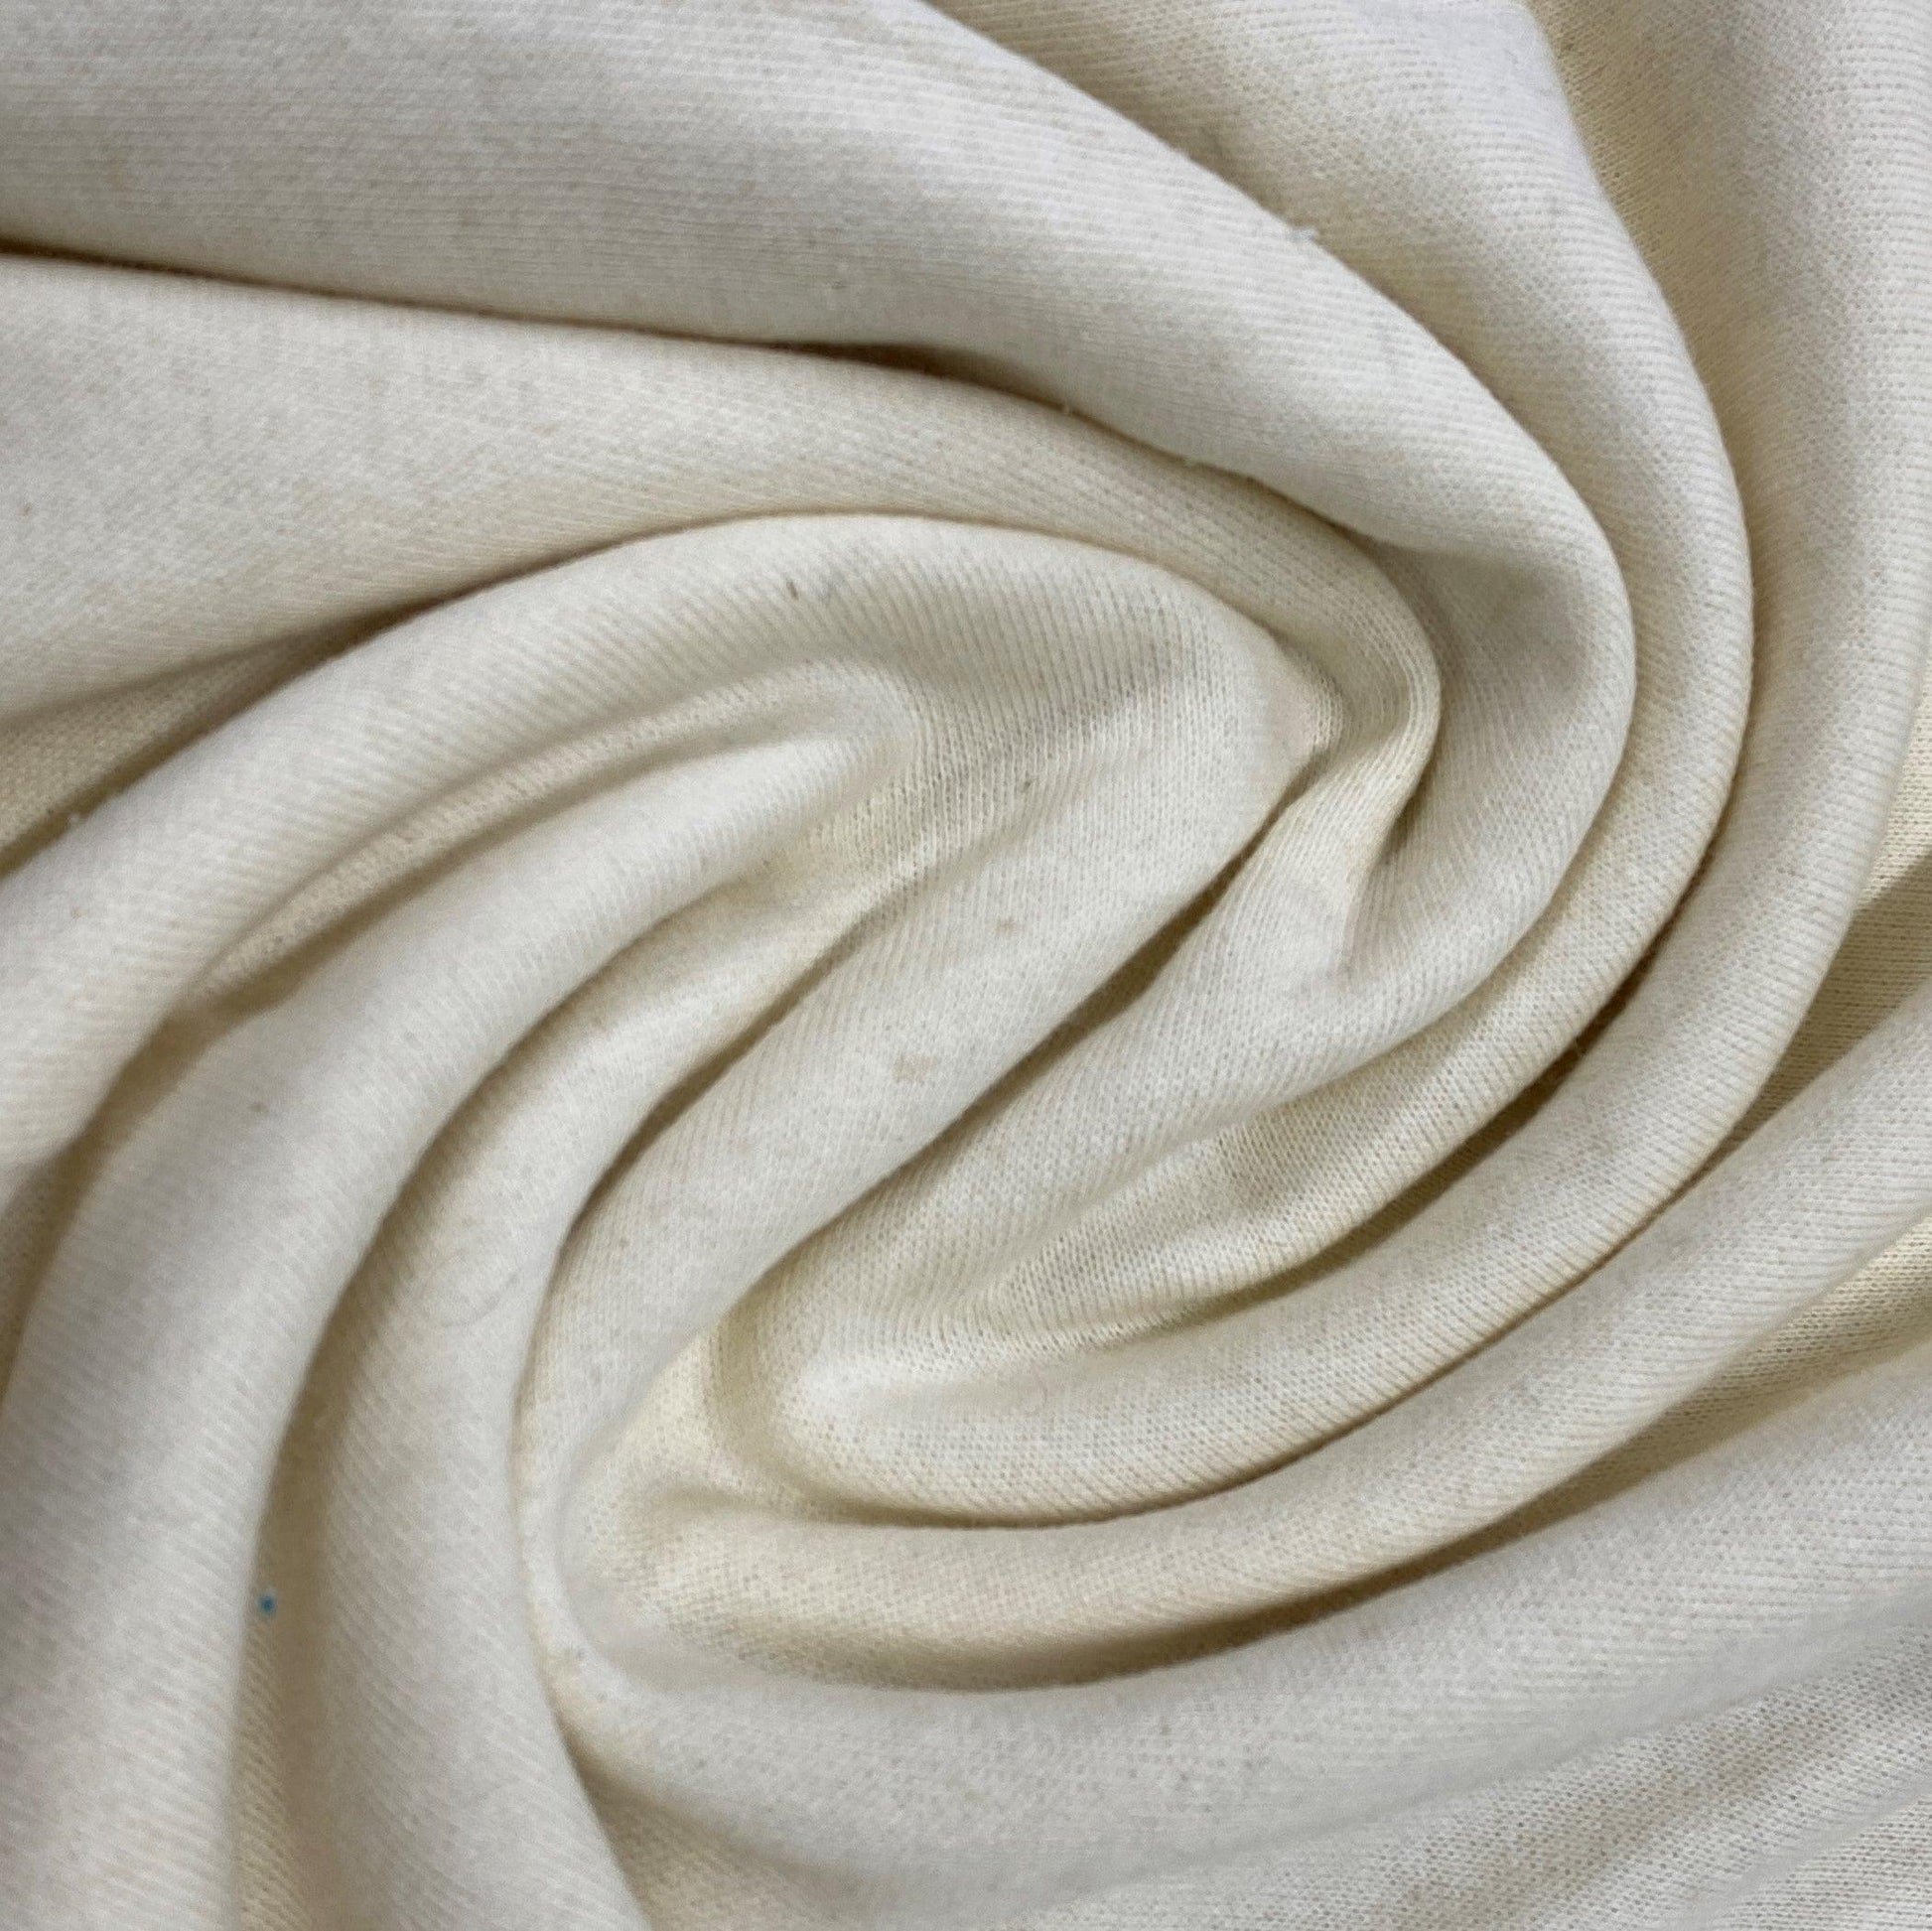 Hemp Cotton Fleece Fabric - 280 GSM, $9.95/yd - Rolls